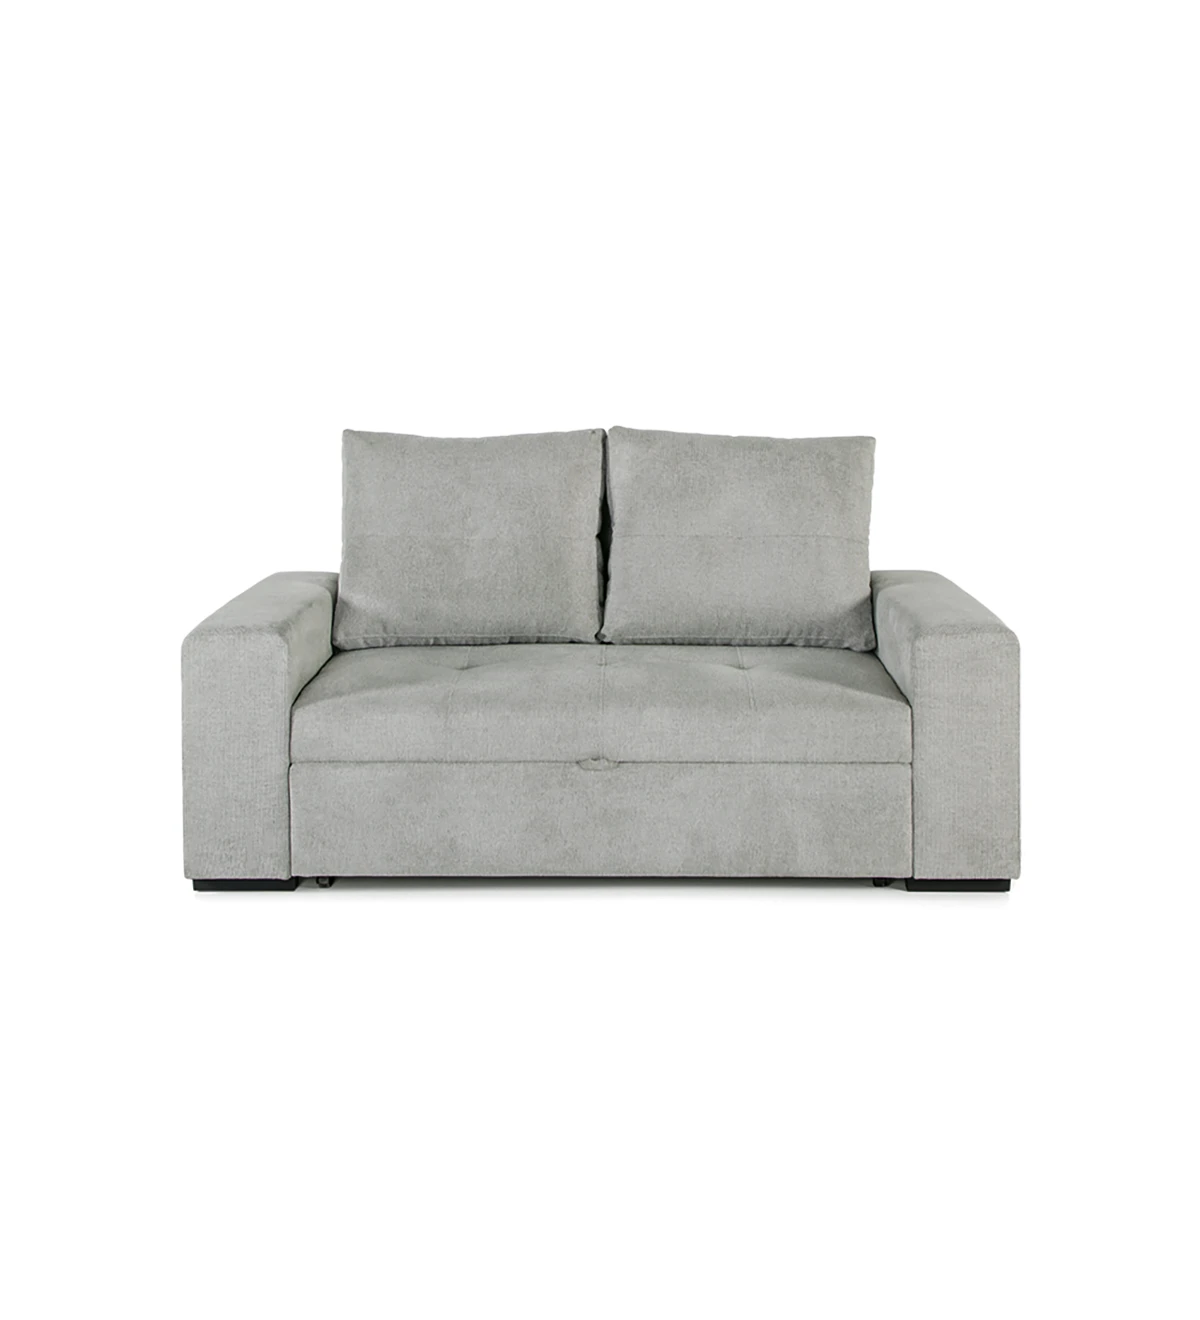 Sofá cama Haiti 2 plazas tapizado en tela gris, cojines respaldo desenfundables, 180 cm.